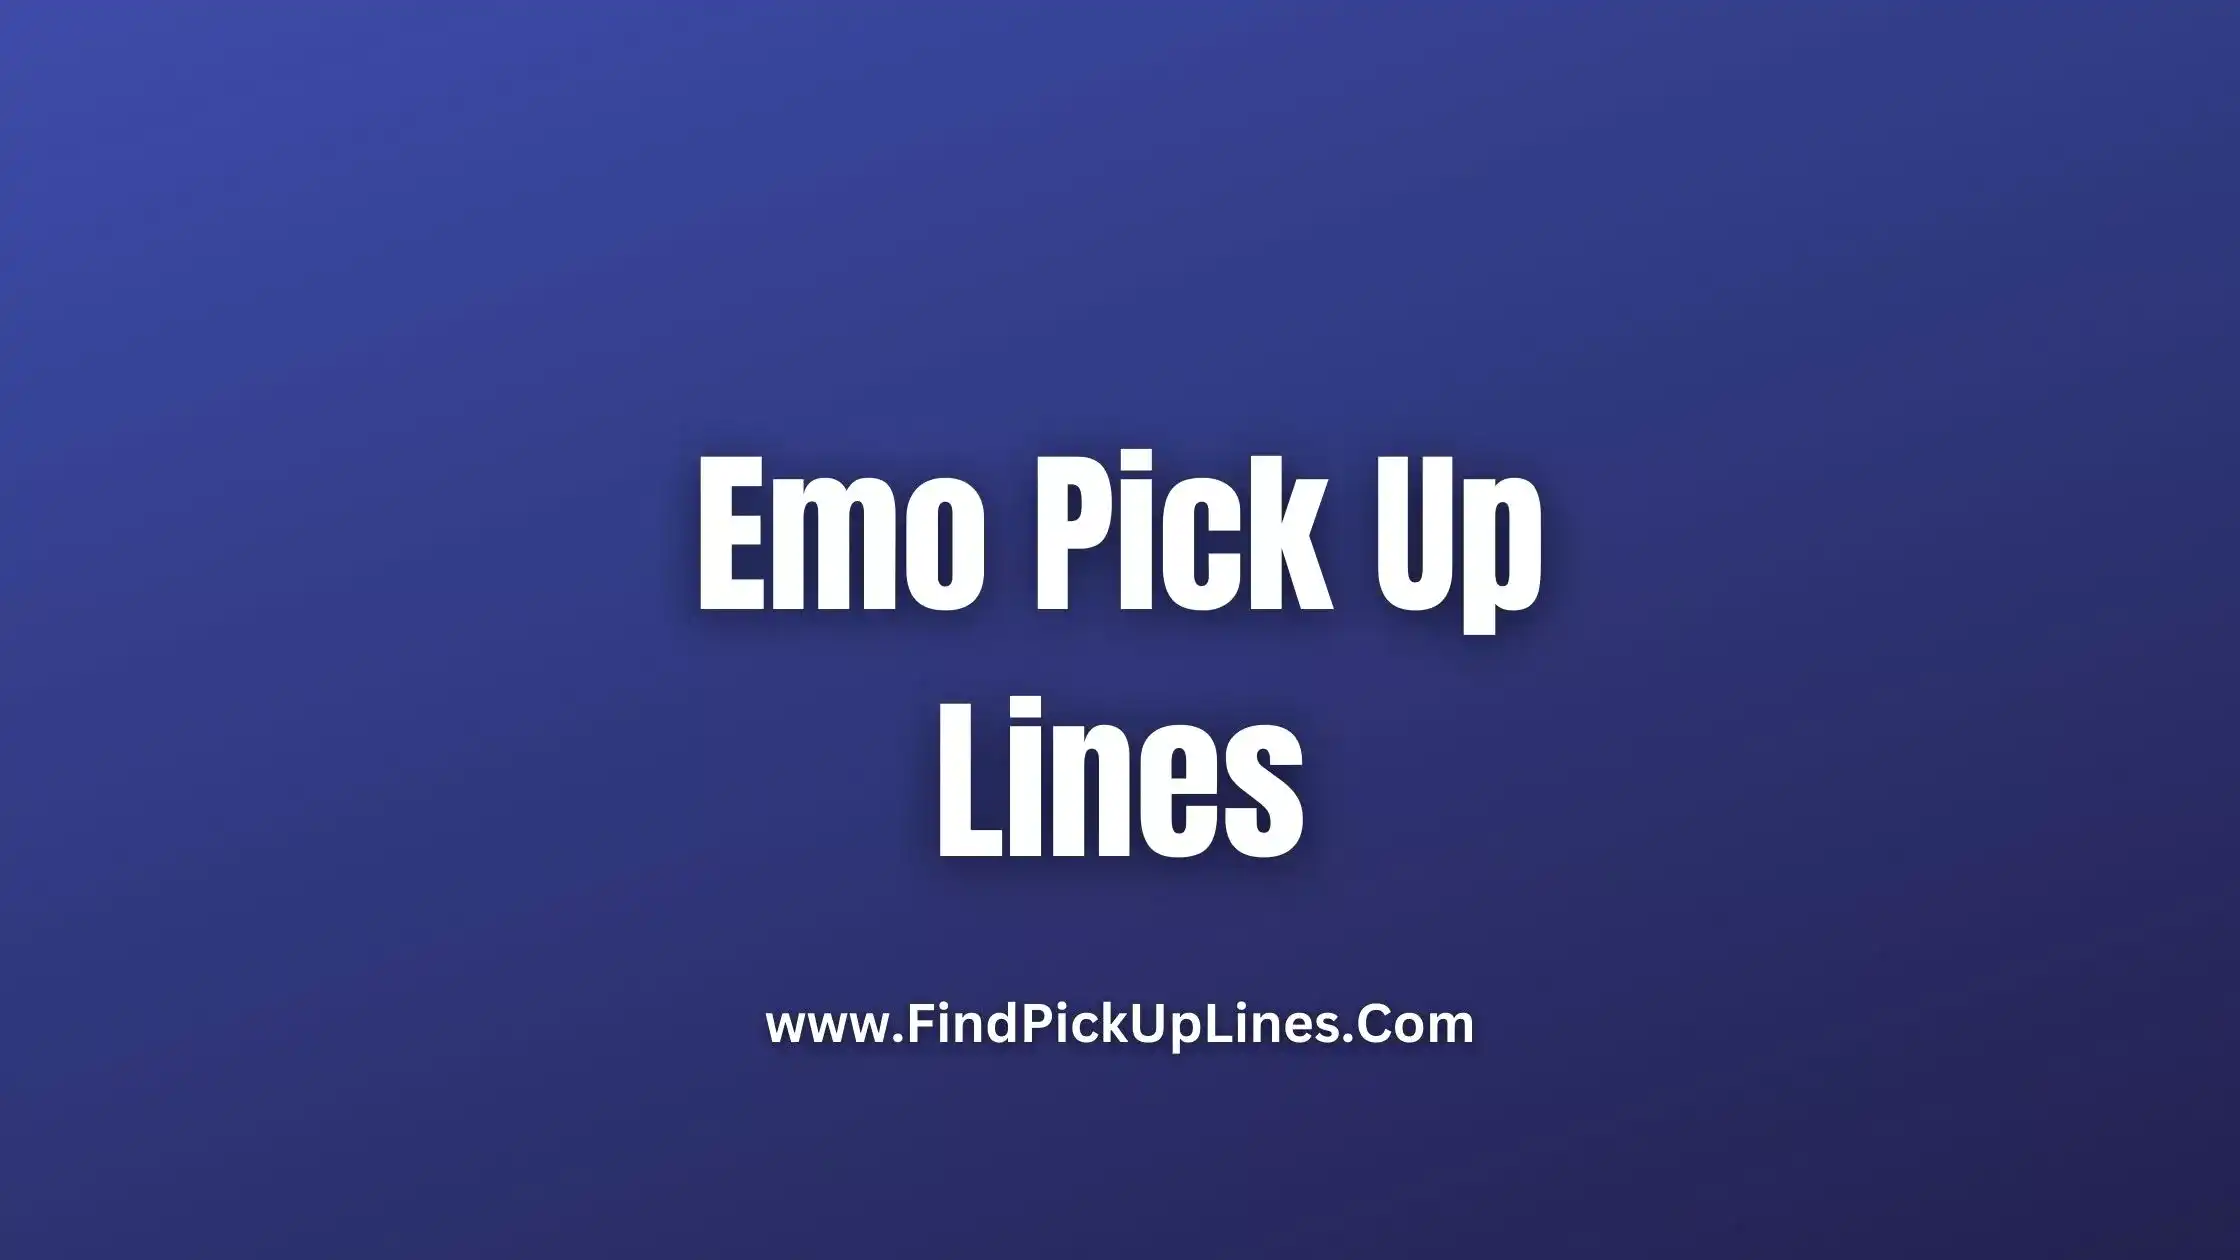 Emo Pick Up Lines